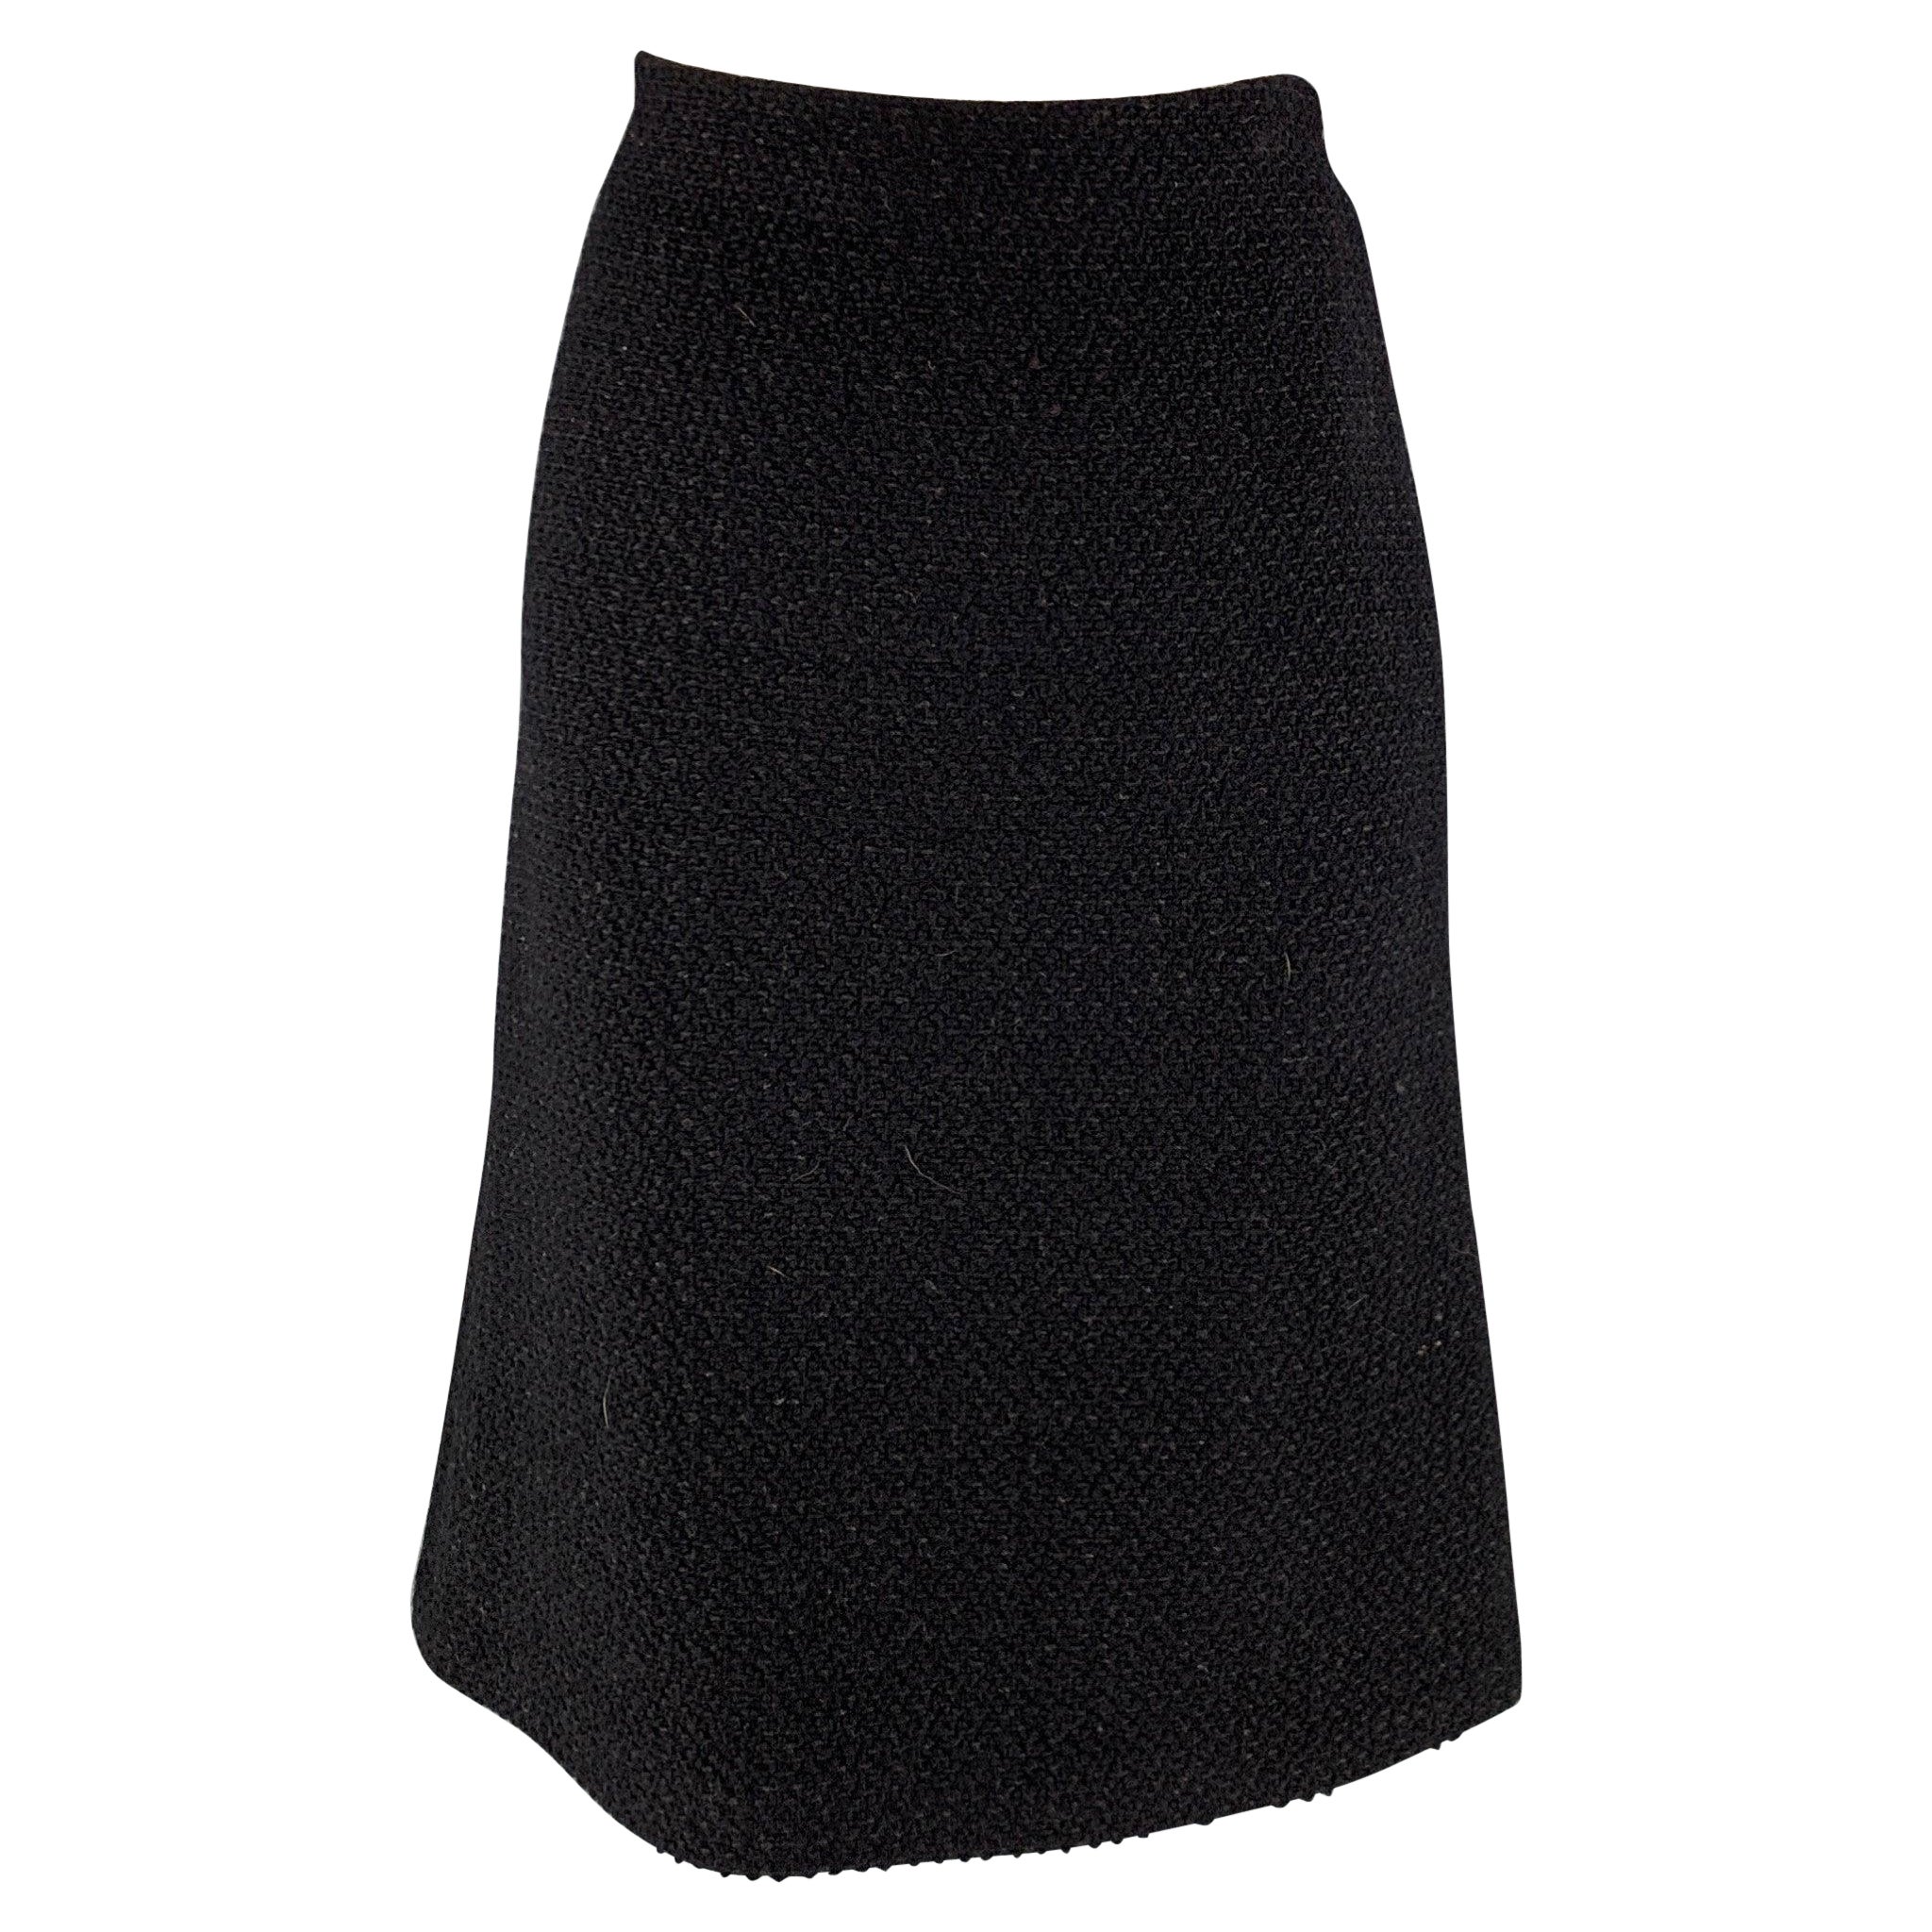 DEREK LAM Size 28 Black Textured A-Line Knee-Length Skirt For Sale